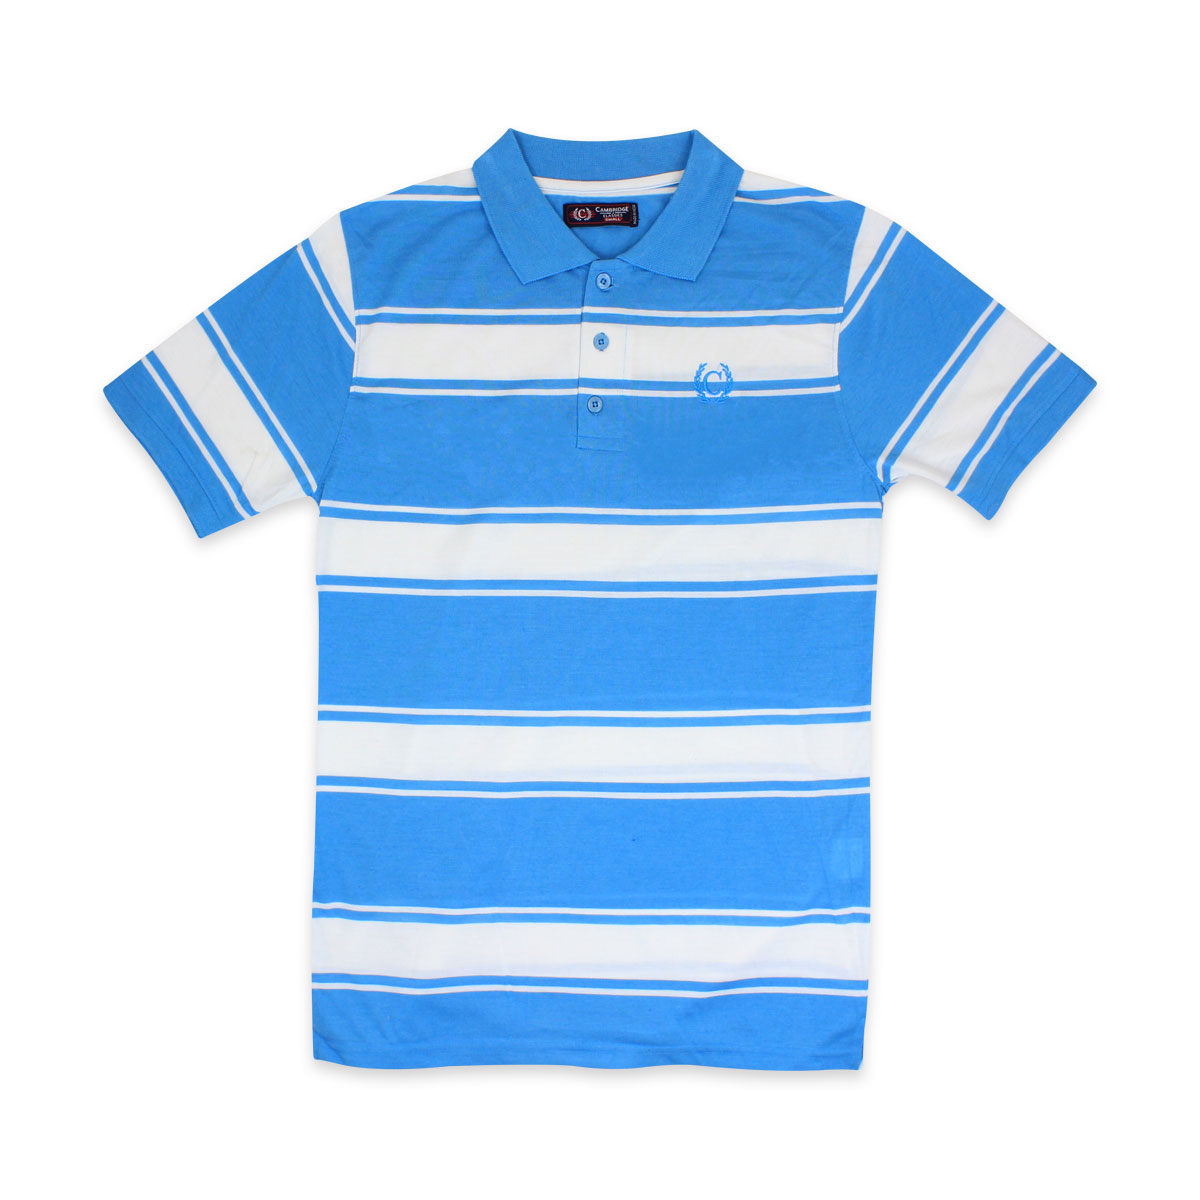 Mens Striped Polo Shirts Pique Collared T Shirt Summer Tee Short Sleeve S M L XL